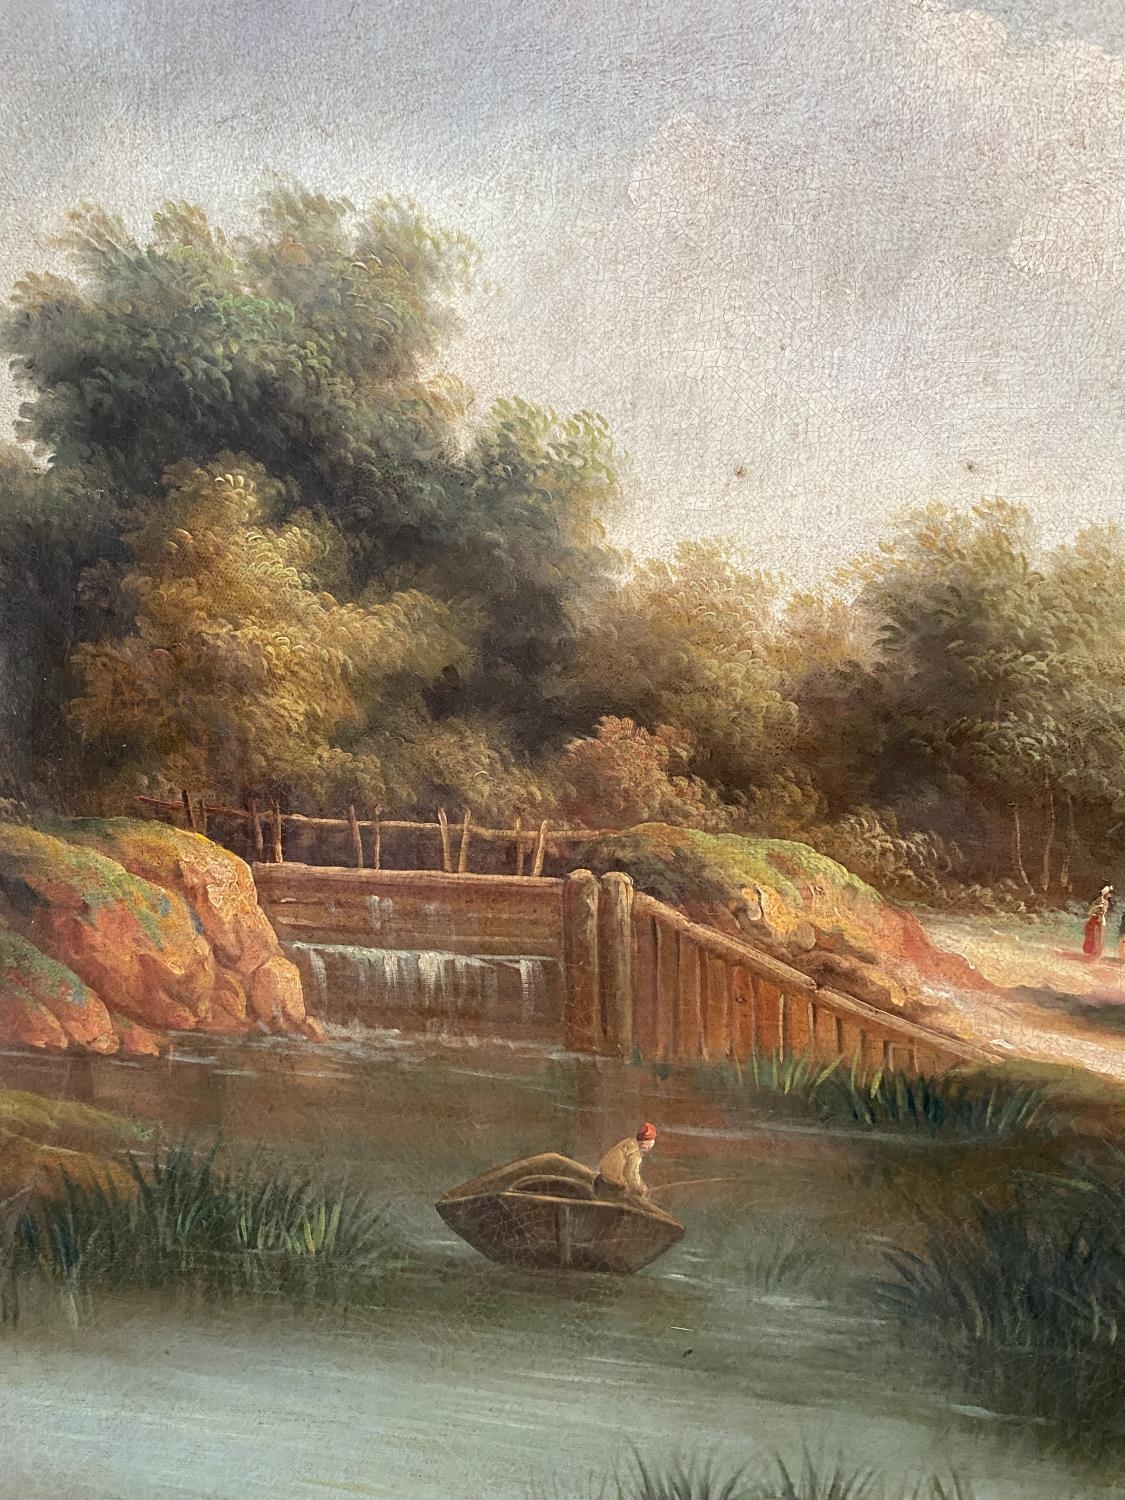 ALLESSANDRO MAFFEI CIRCA 1790-1859, Italian, Oil on canvas, Country River Scene, signed lower right, - Image 5 of 6